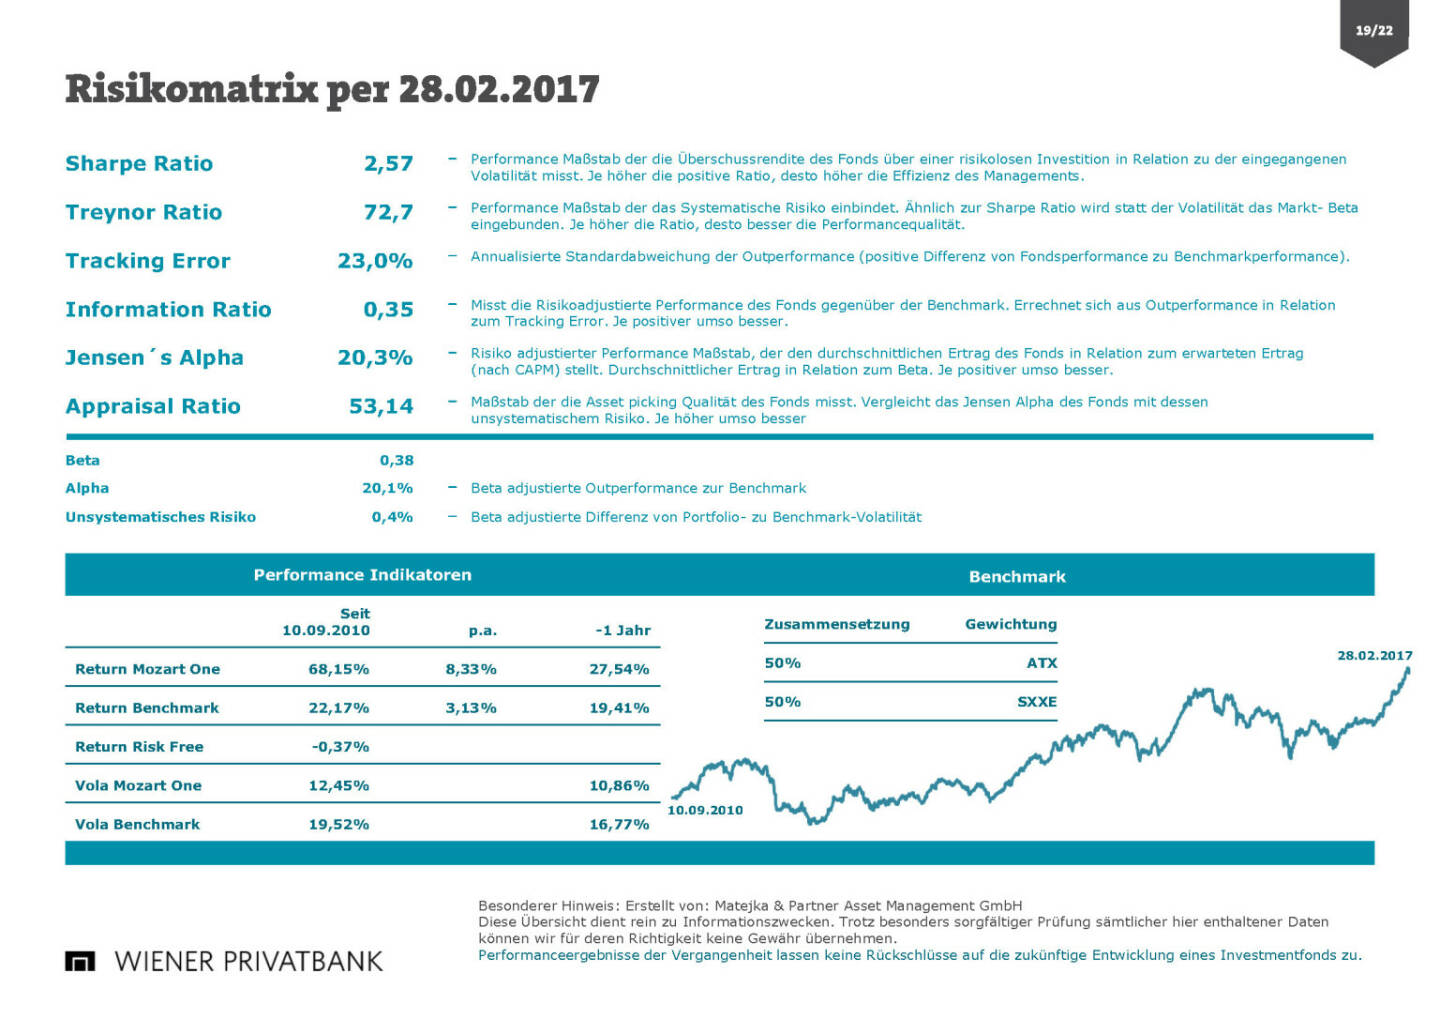 Wiener Privatbank - Risikomatrix